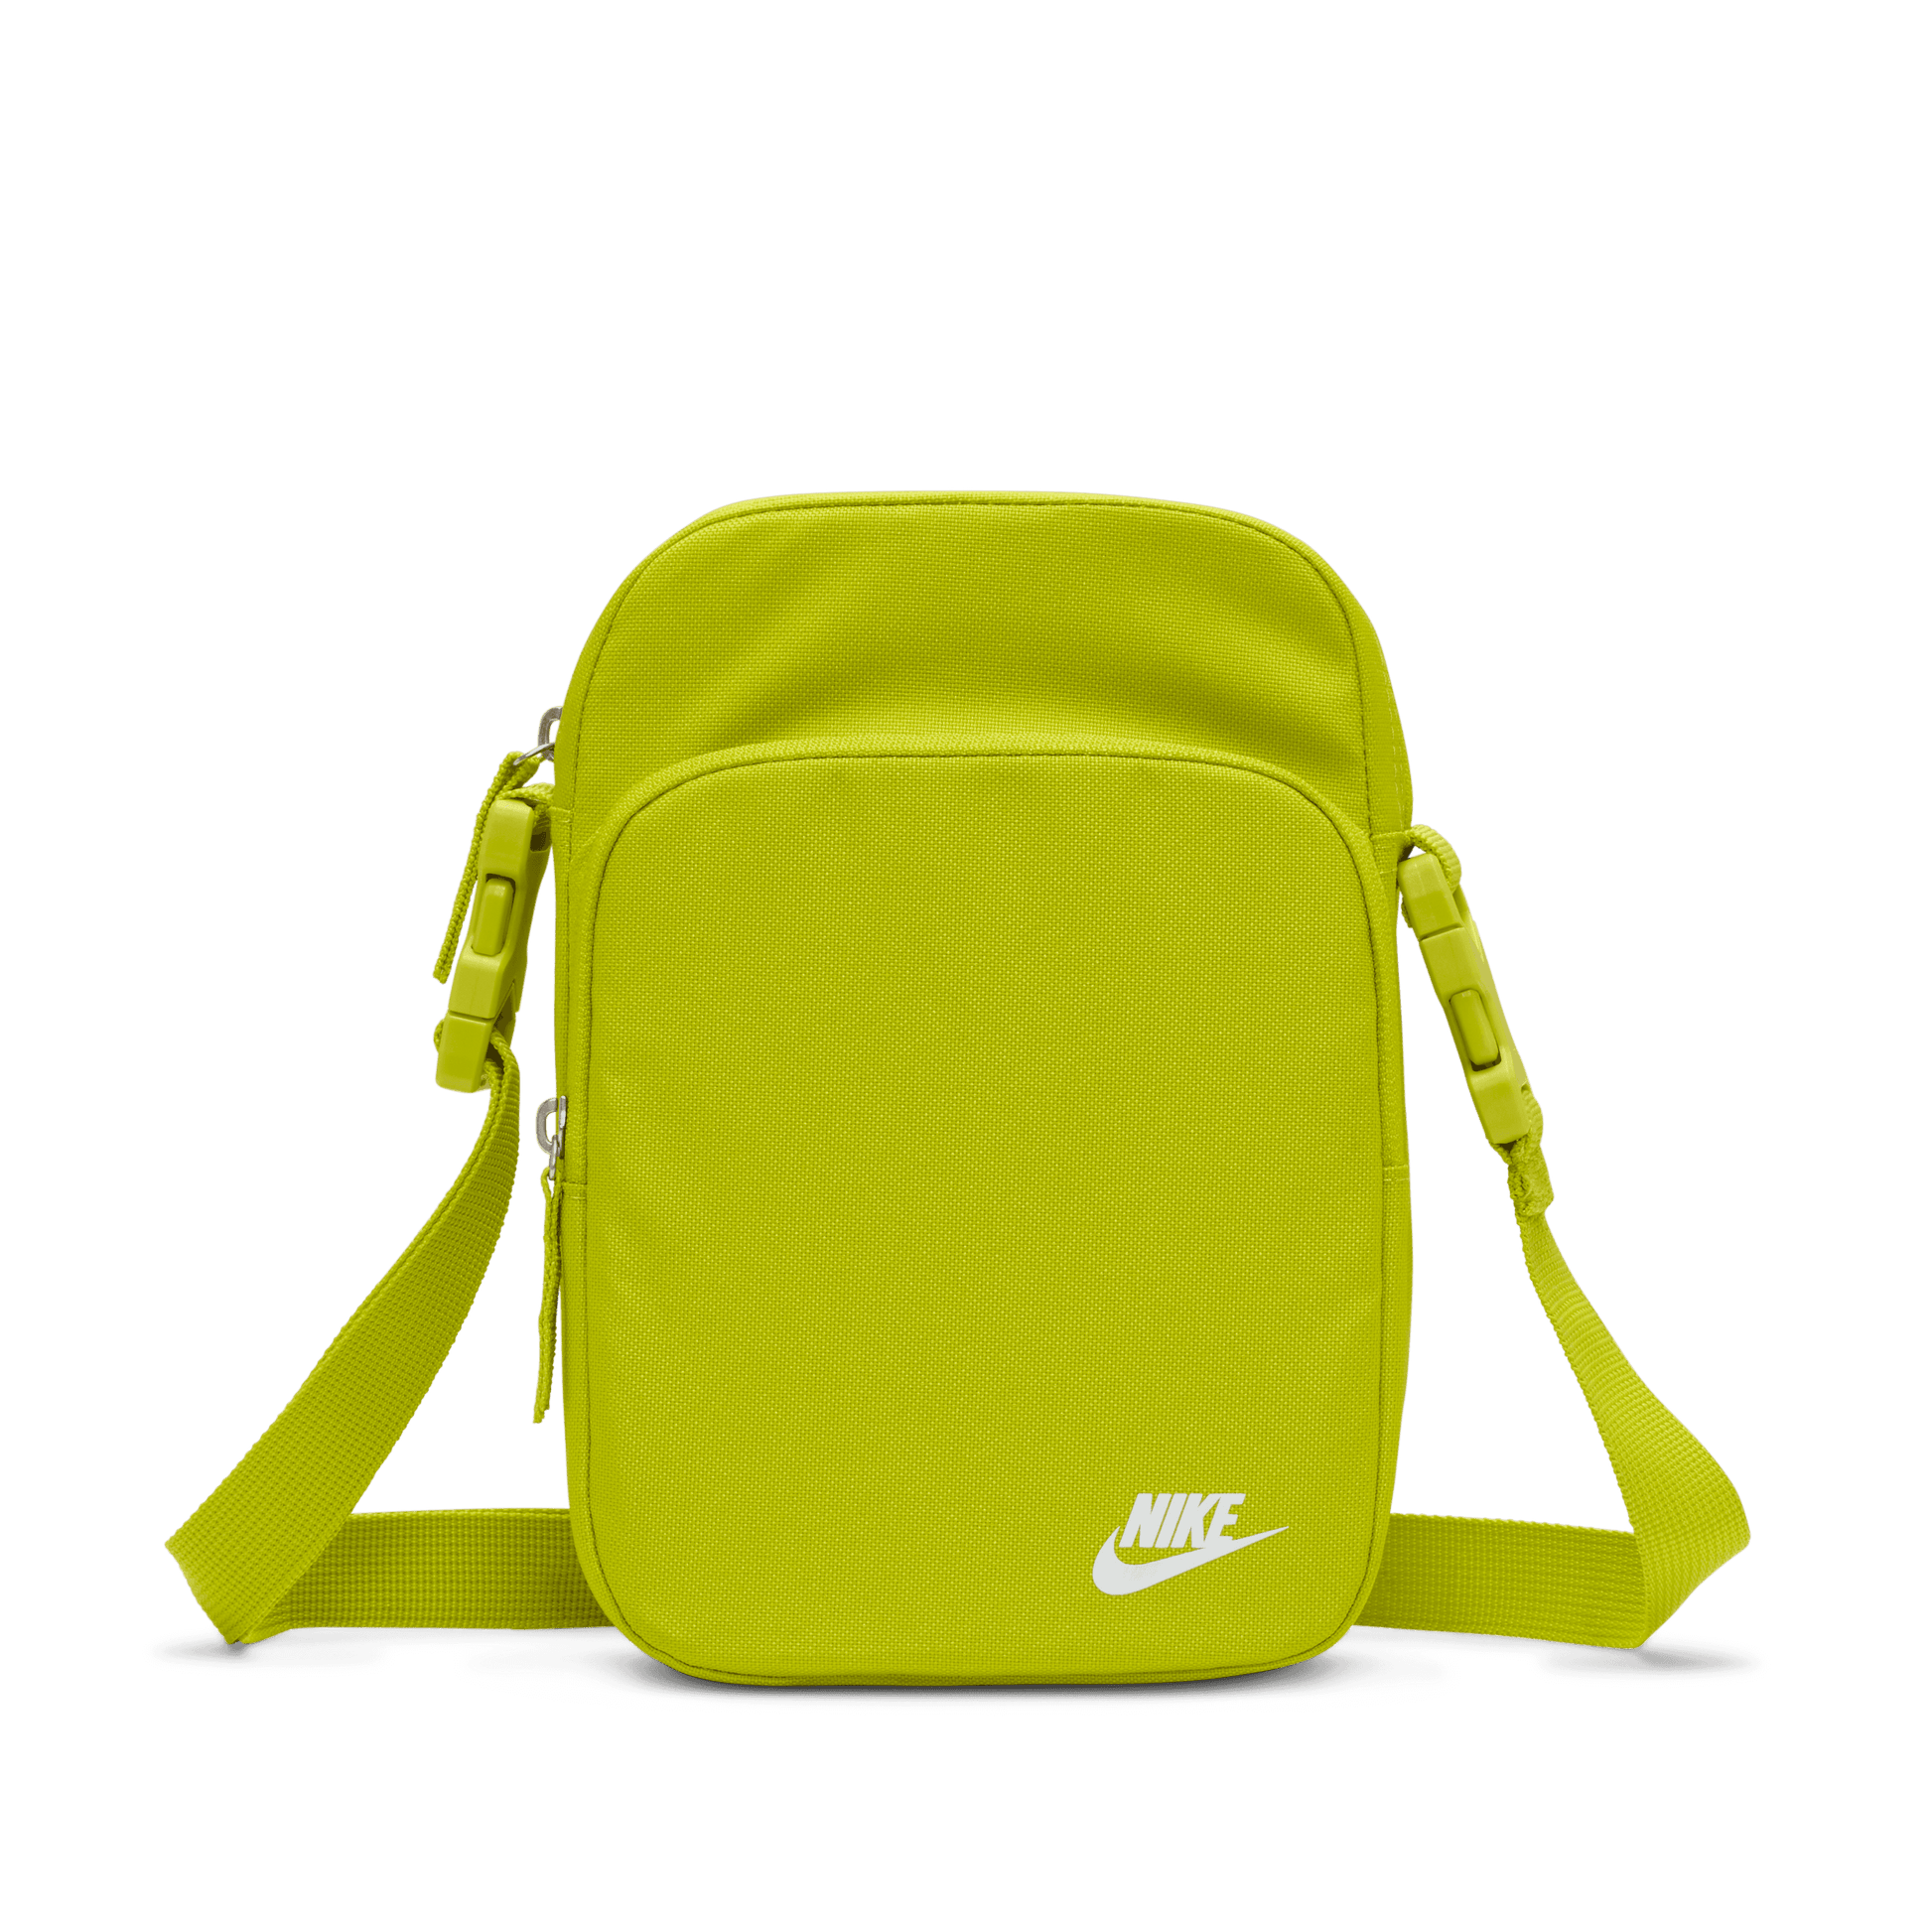 Nike Heritage 2.0 Small Items Crossbody Bag-Green